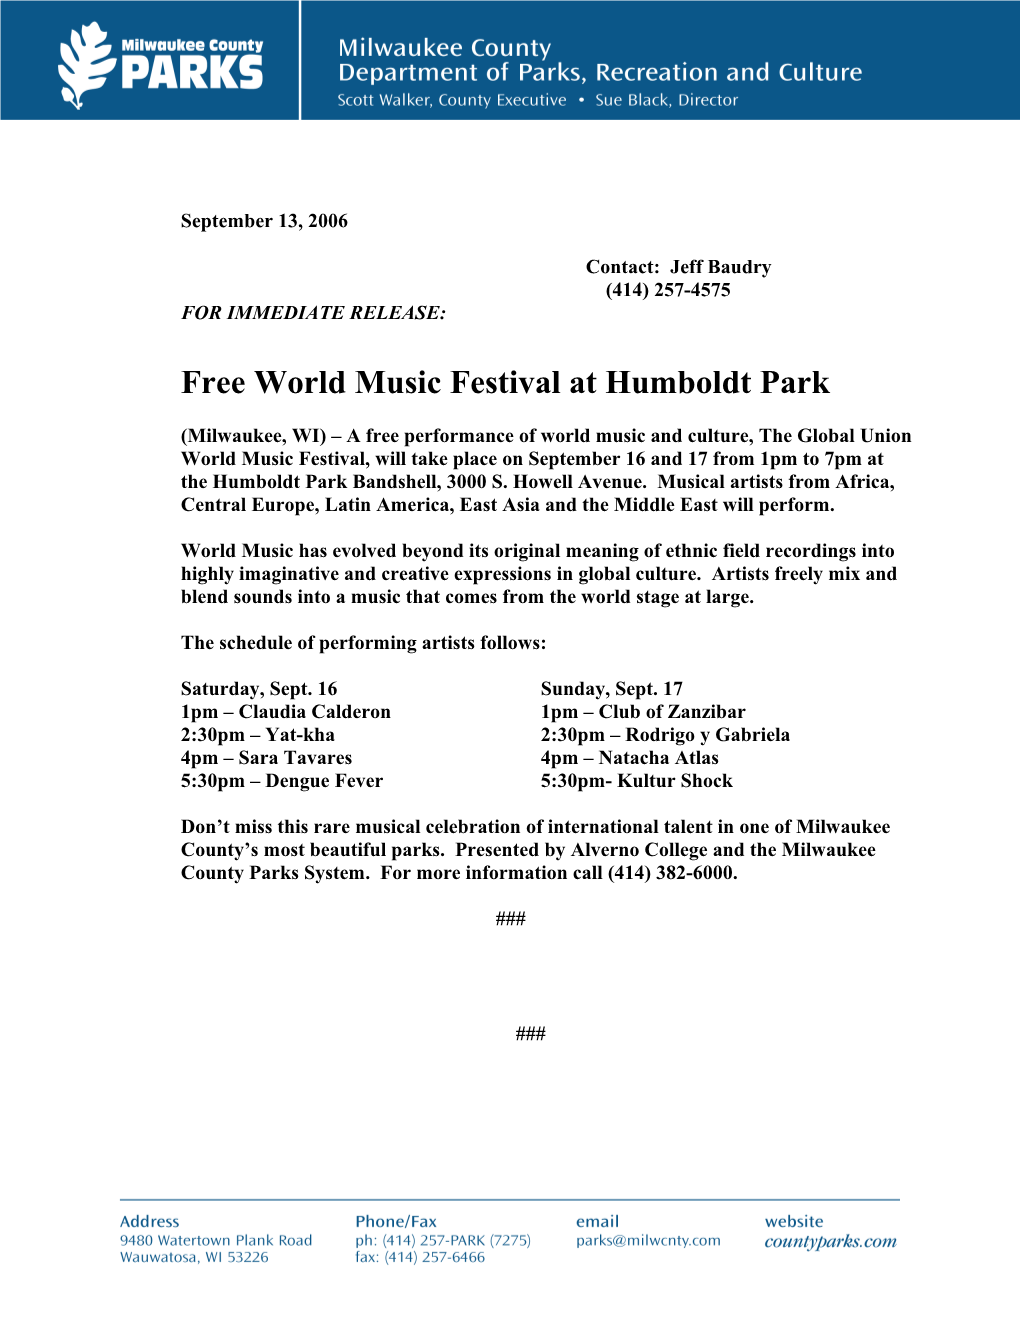 Free World Music Festival at Humboldt Park